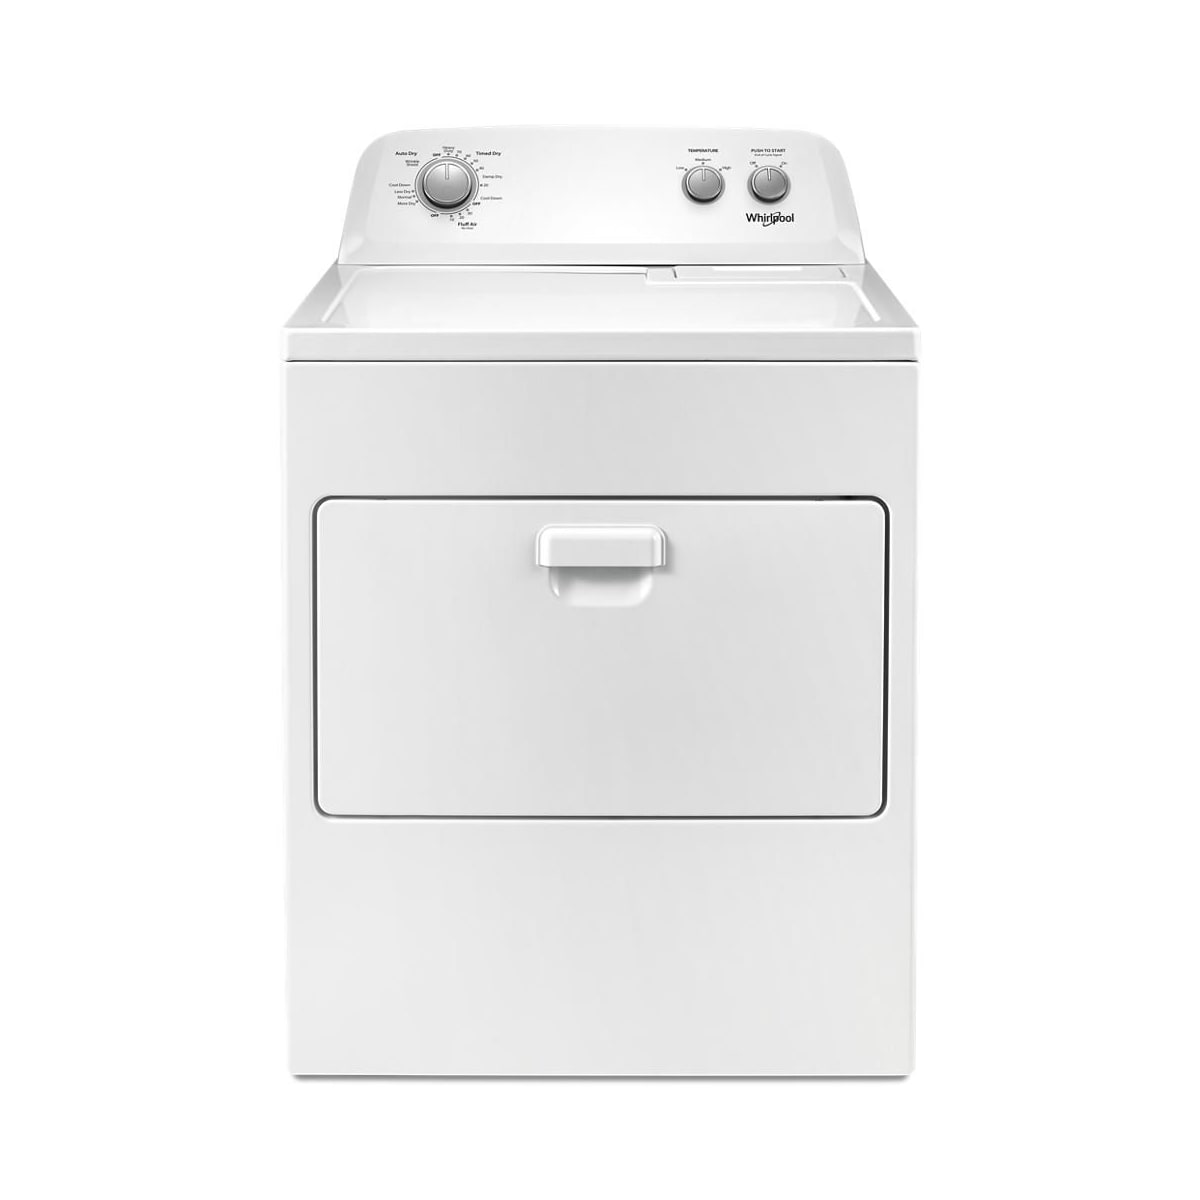 Magic Chef Dryers Laundry Appliances - MCSDRY1